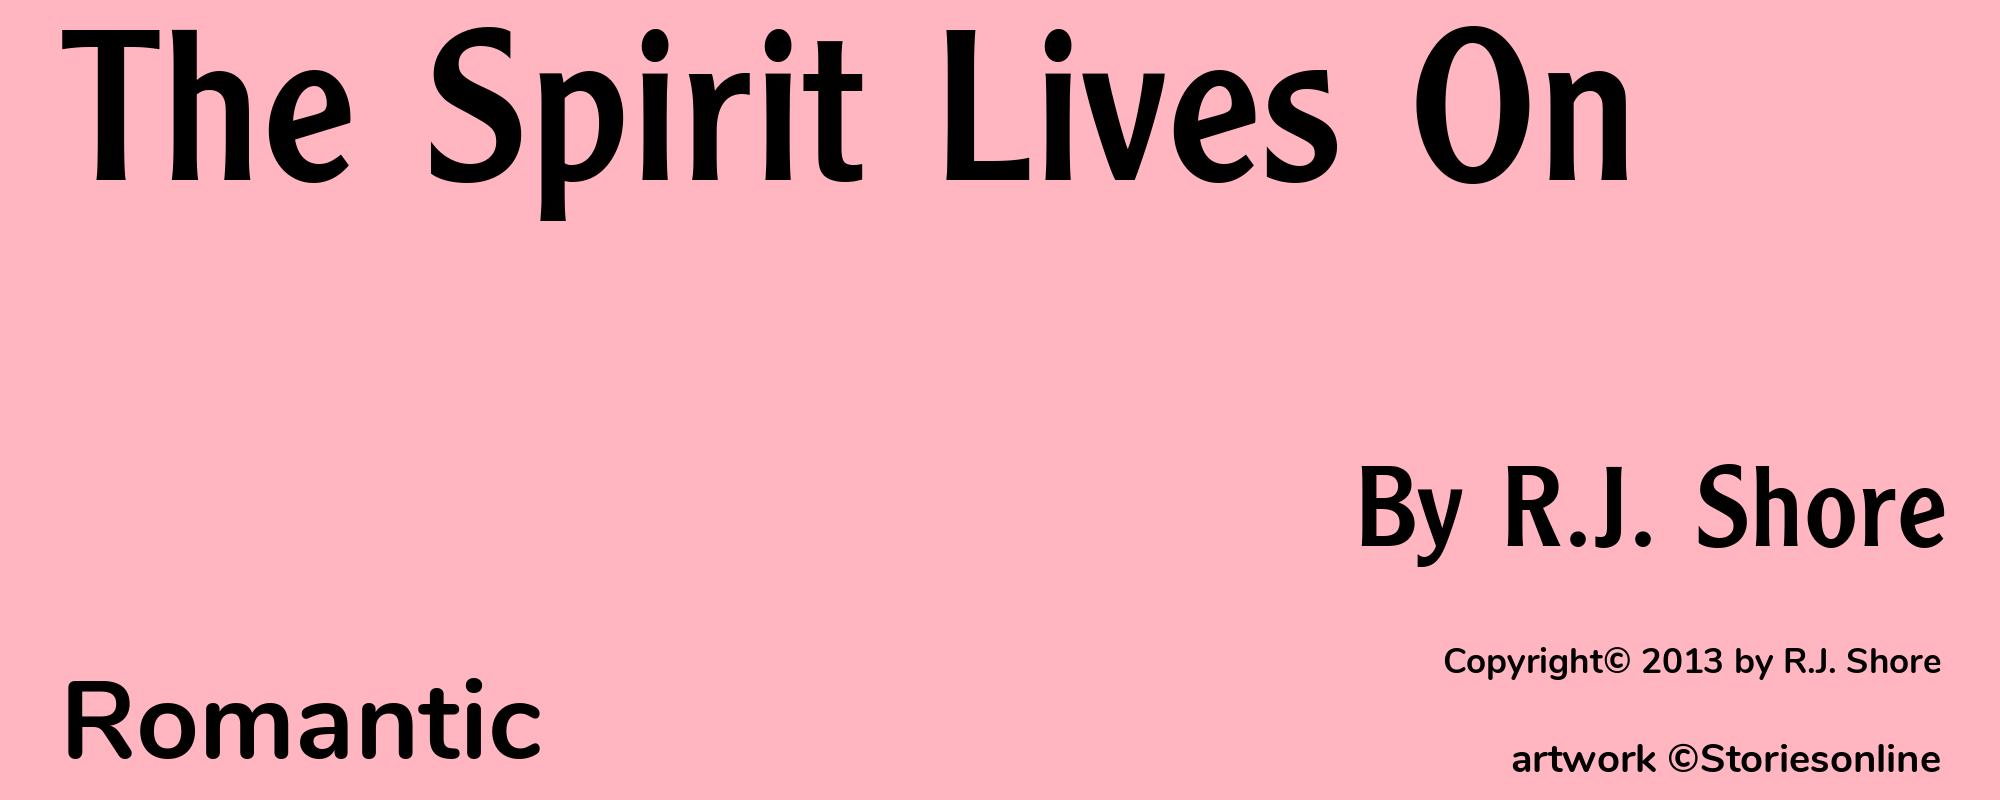 The Spirit Lives On - Cover